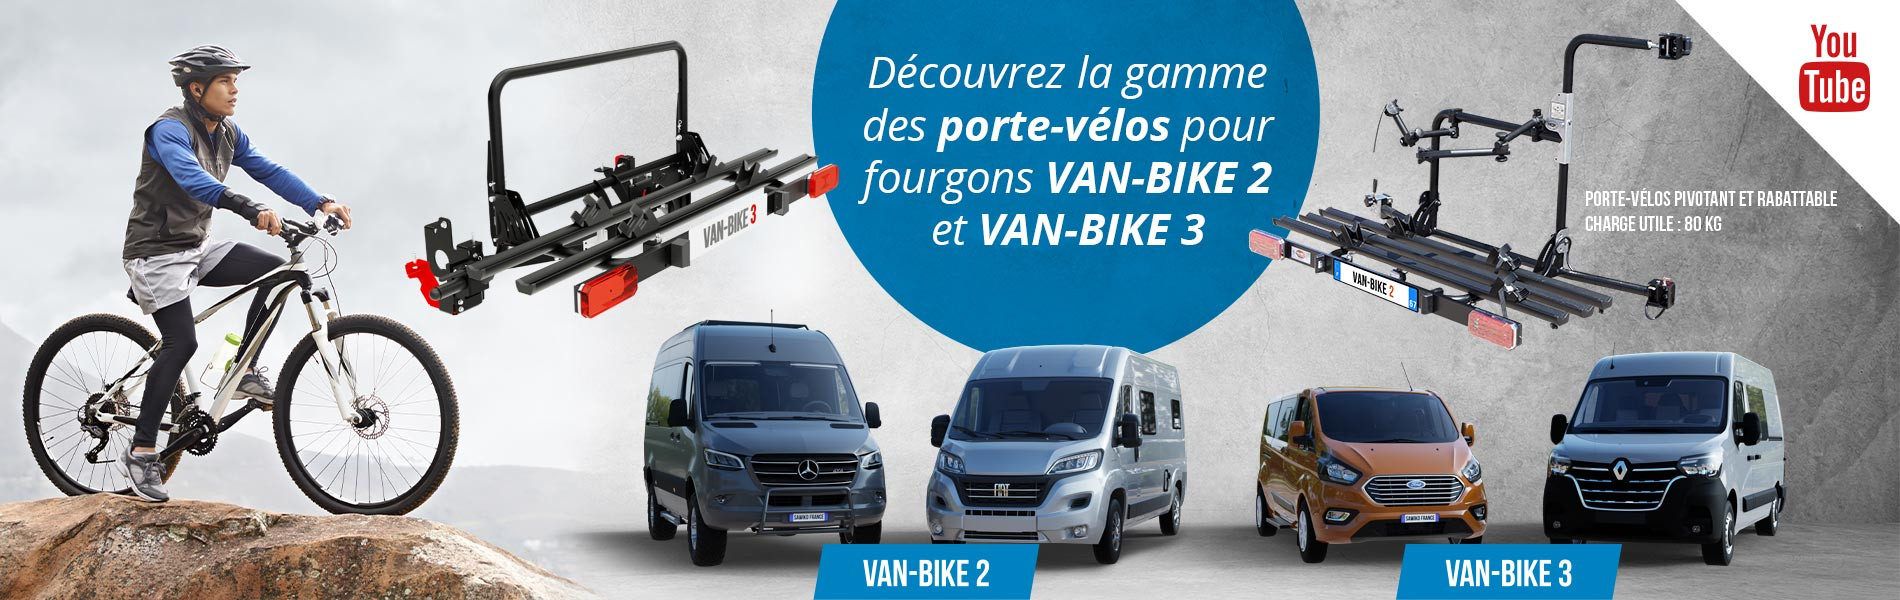 Porte-vélos Van-Bike 2 et Van-Bike 3